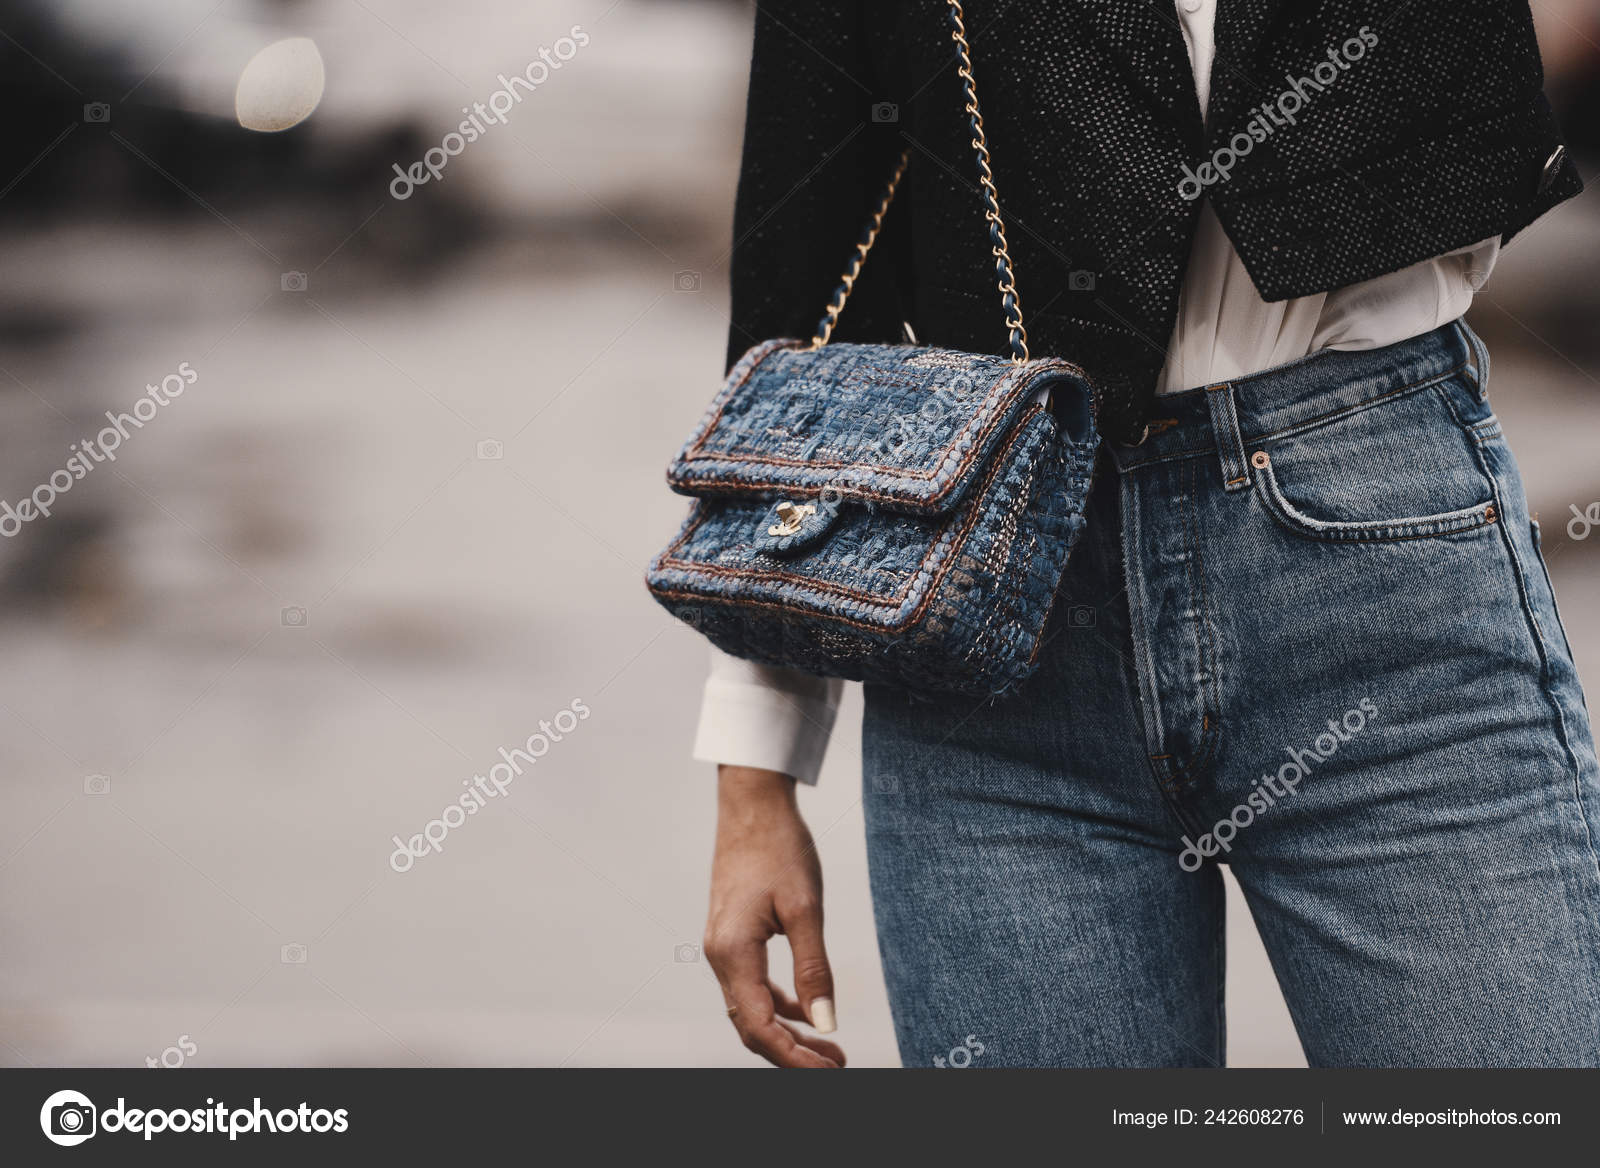 October 2018 Paris France Fashionable Girl Wearing Chanel Bag